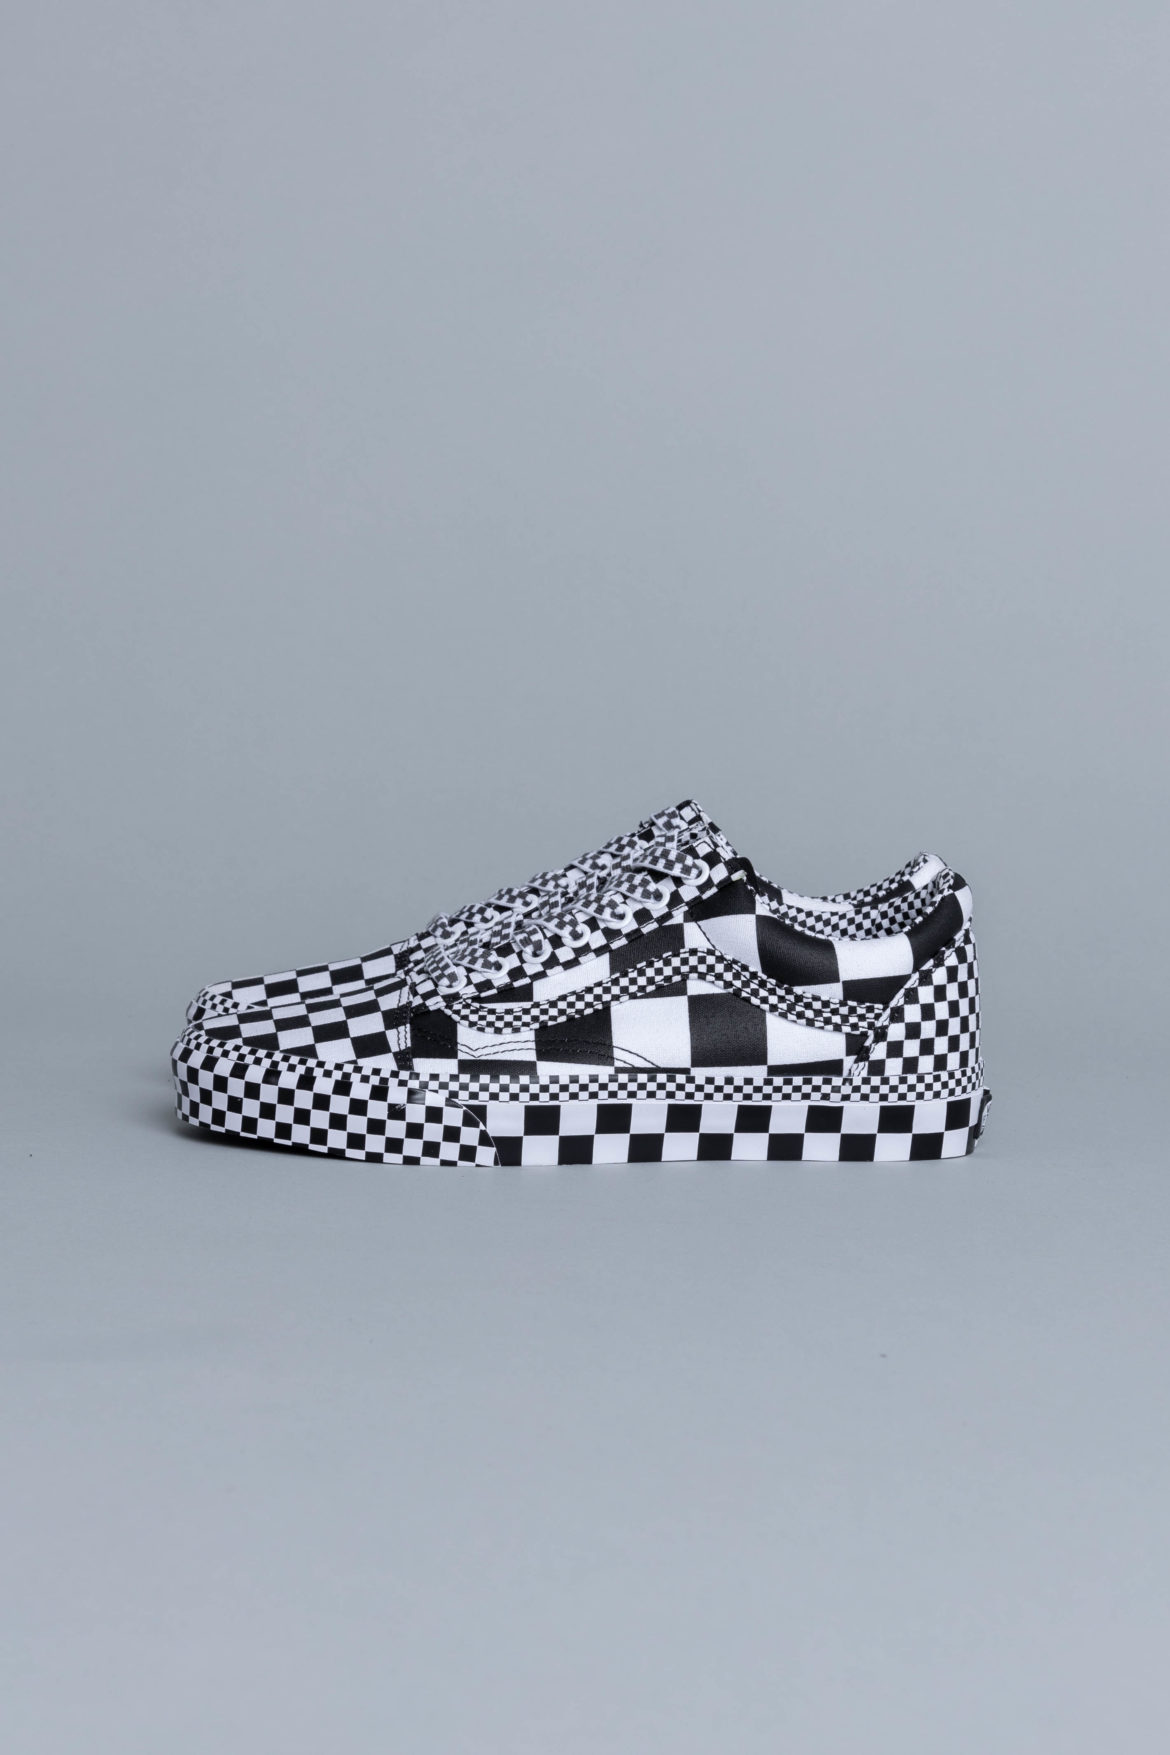 vans old skool all over checkerboard black & white skate shoes